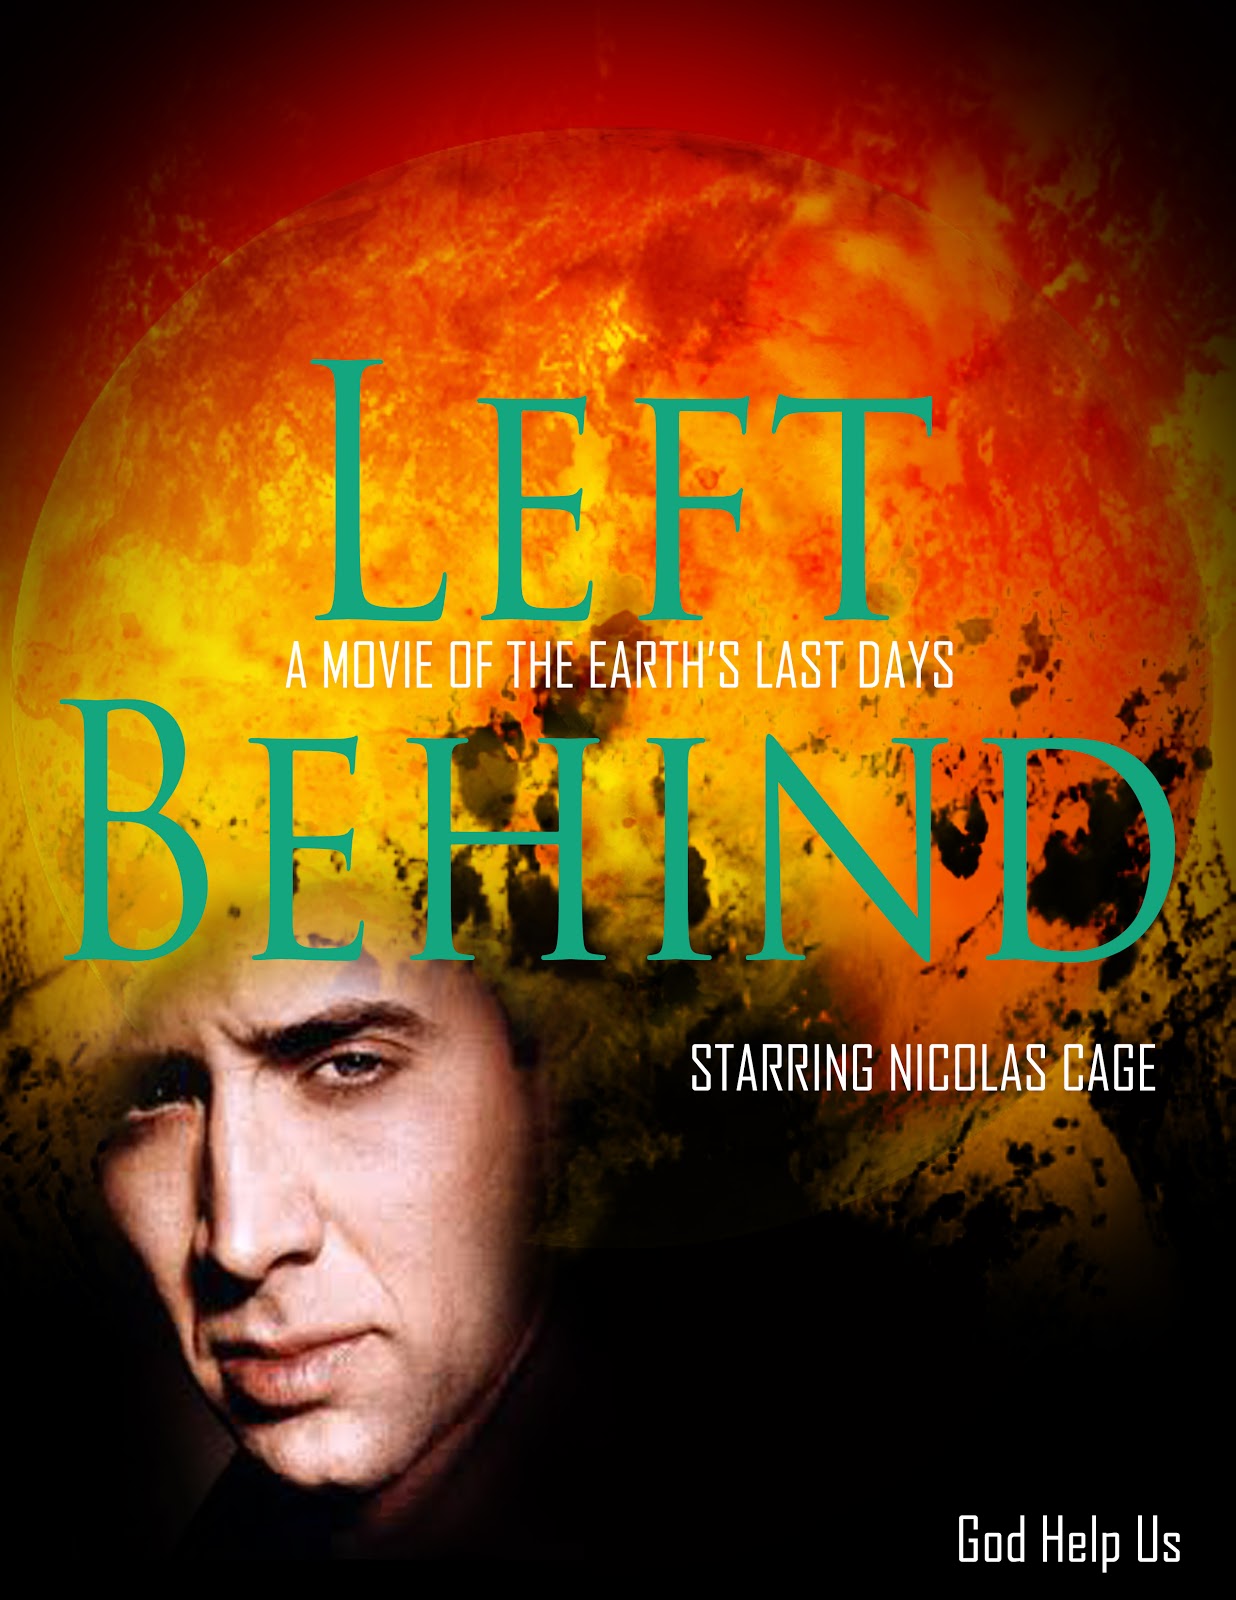 New 'Left Behind' Movie staring Nicolas Cage